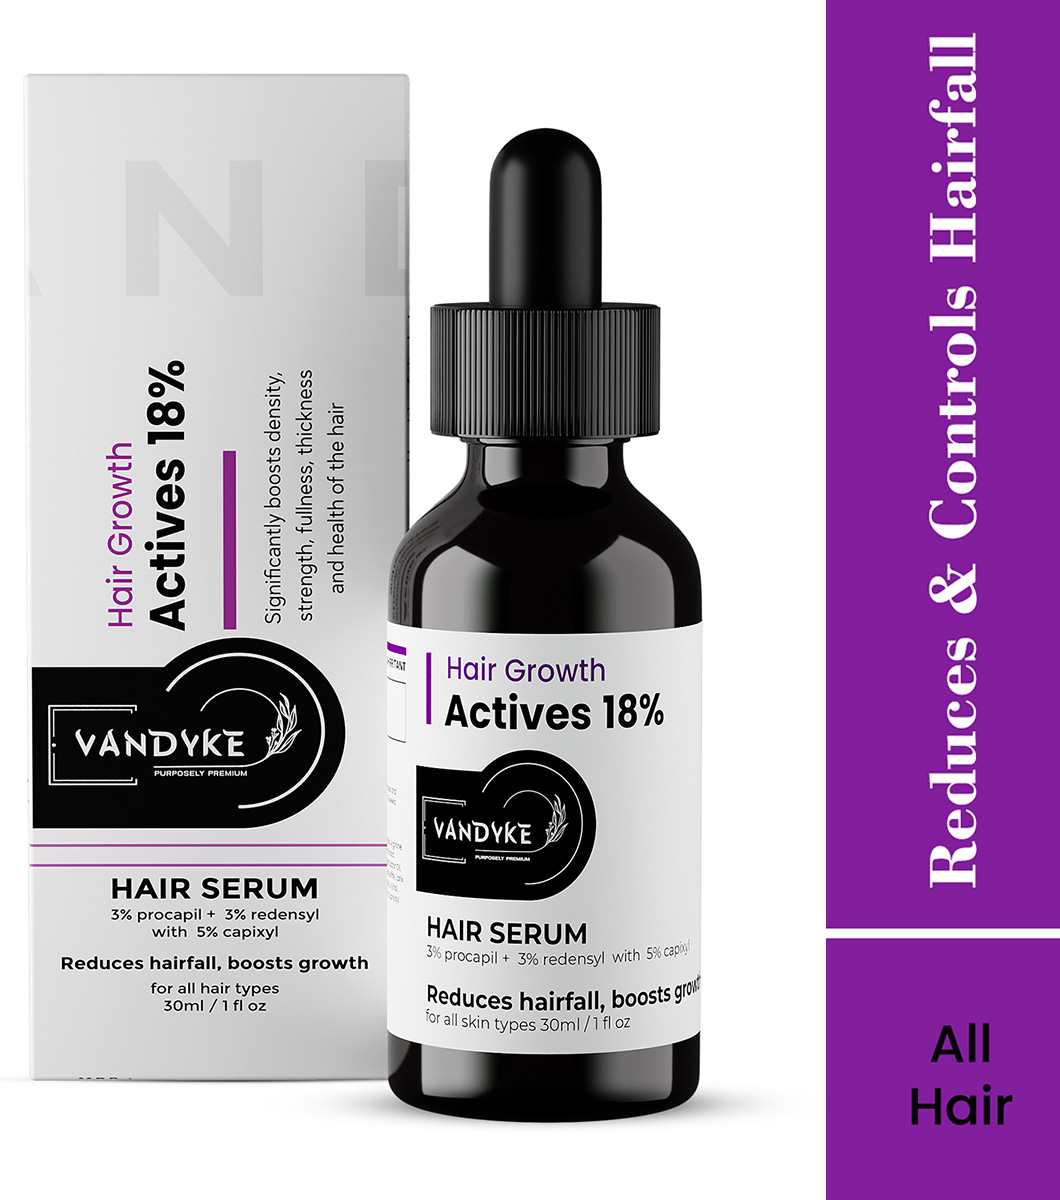 Hair Growth Actives 18% Hair Serum - Vandyke